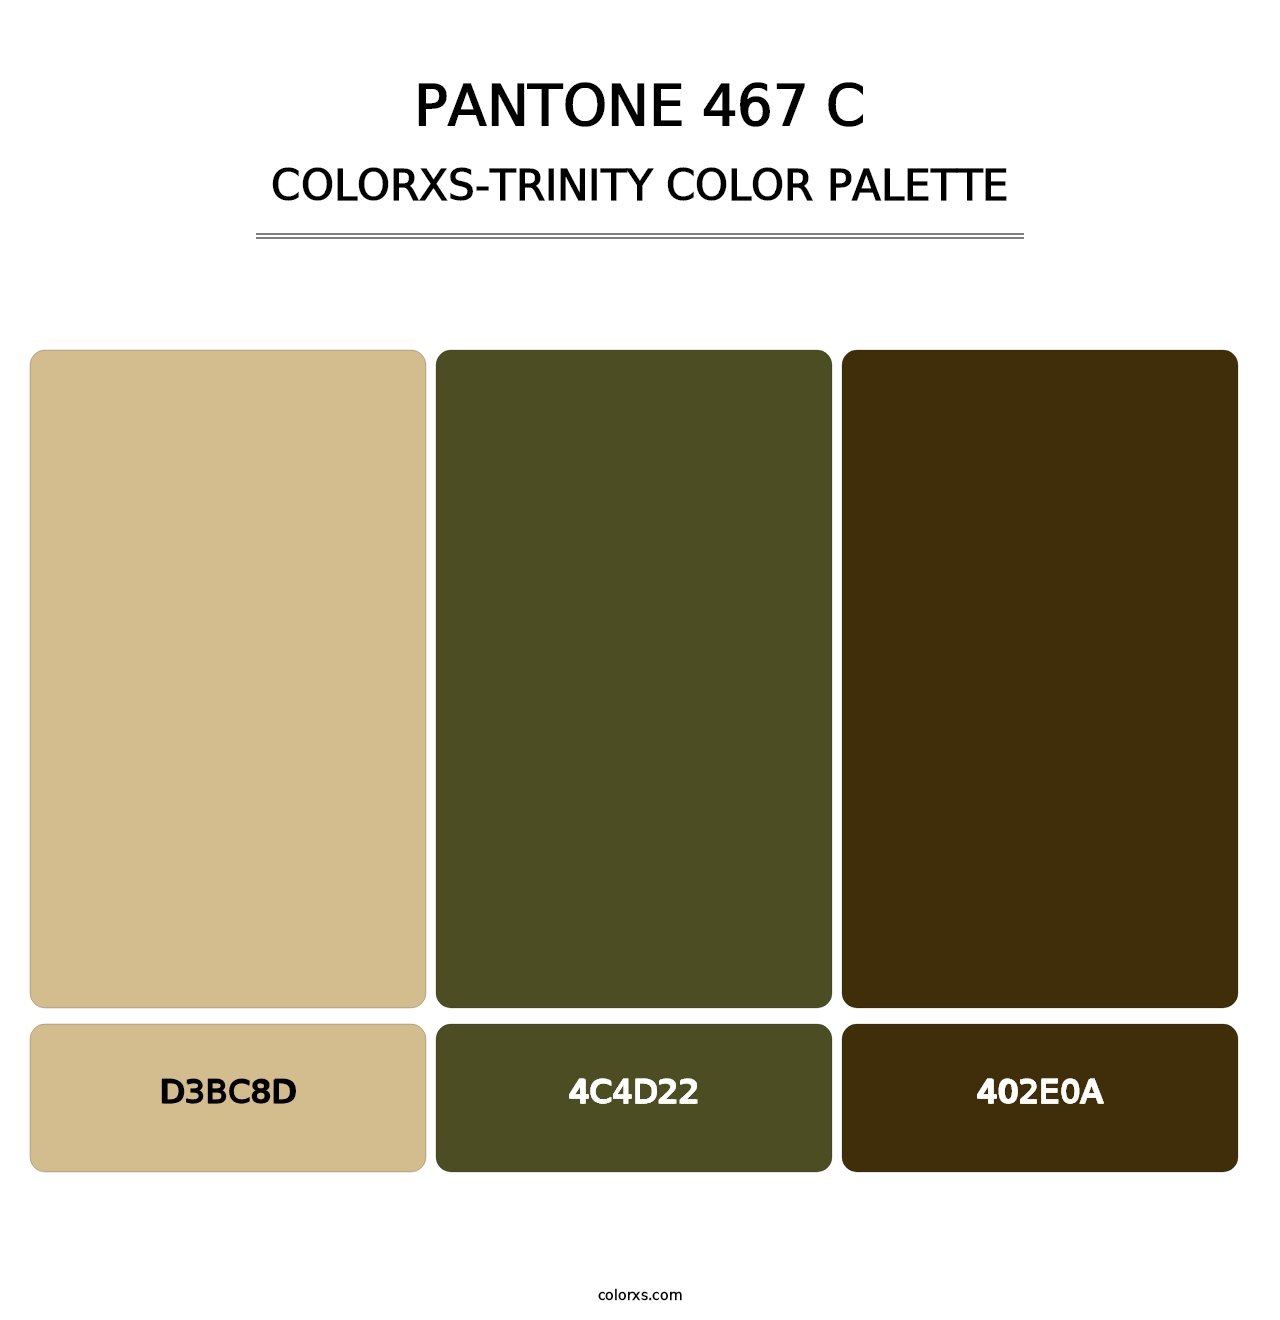 PANTONE 467 C - Colorxs Trinity Palette